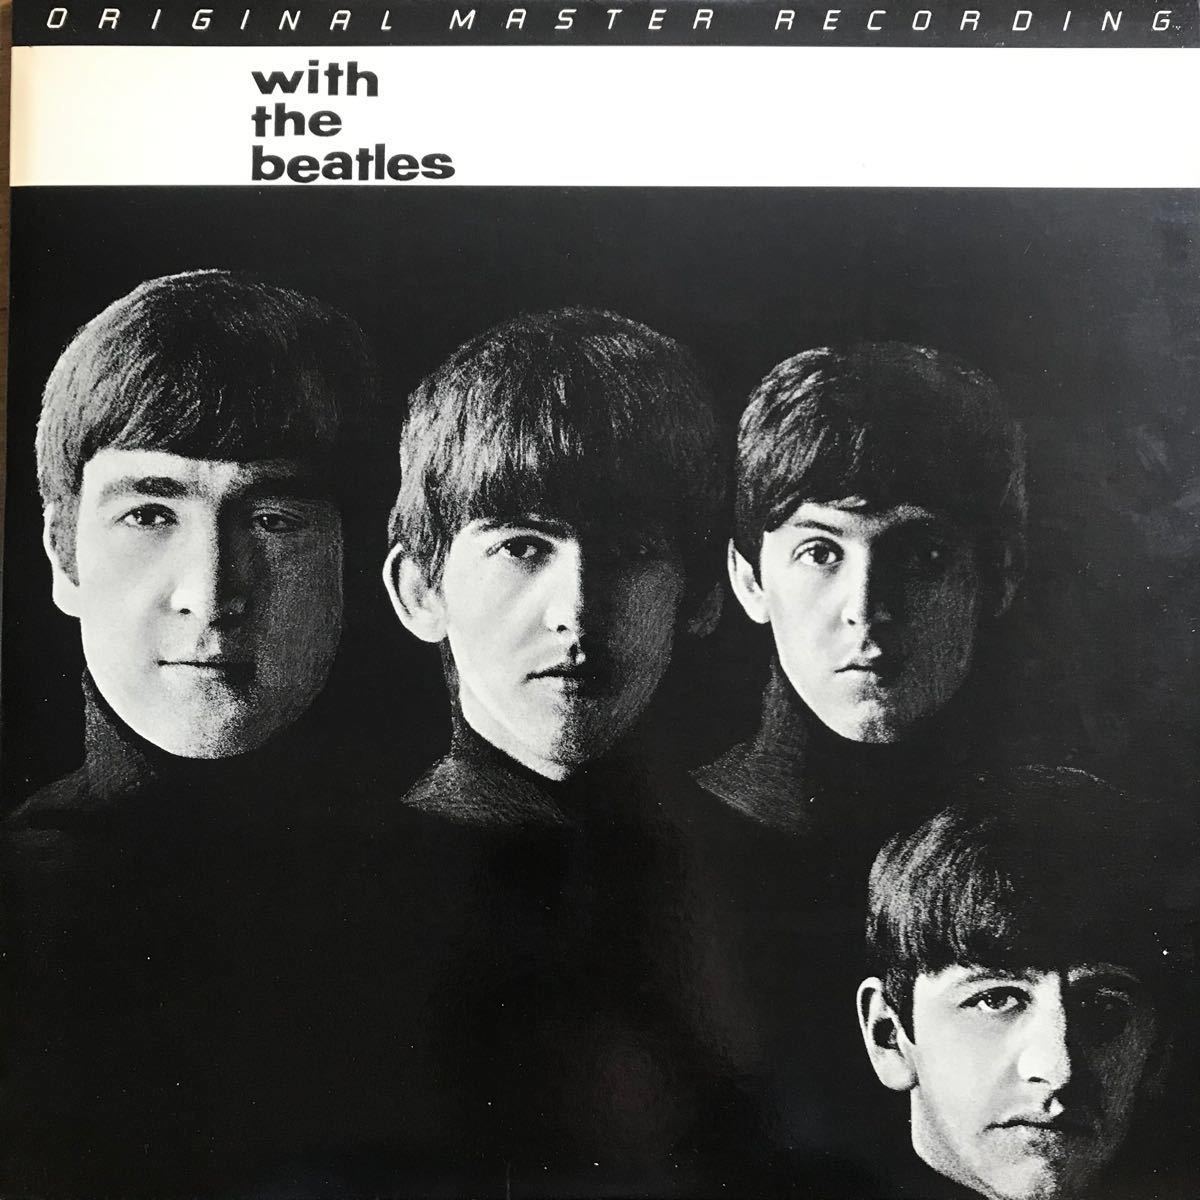 originalmaster recordingWITH THE Beatles